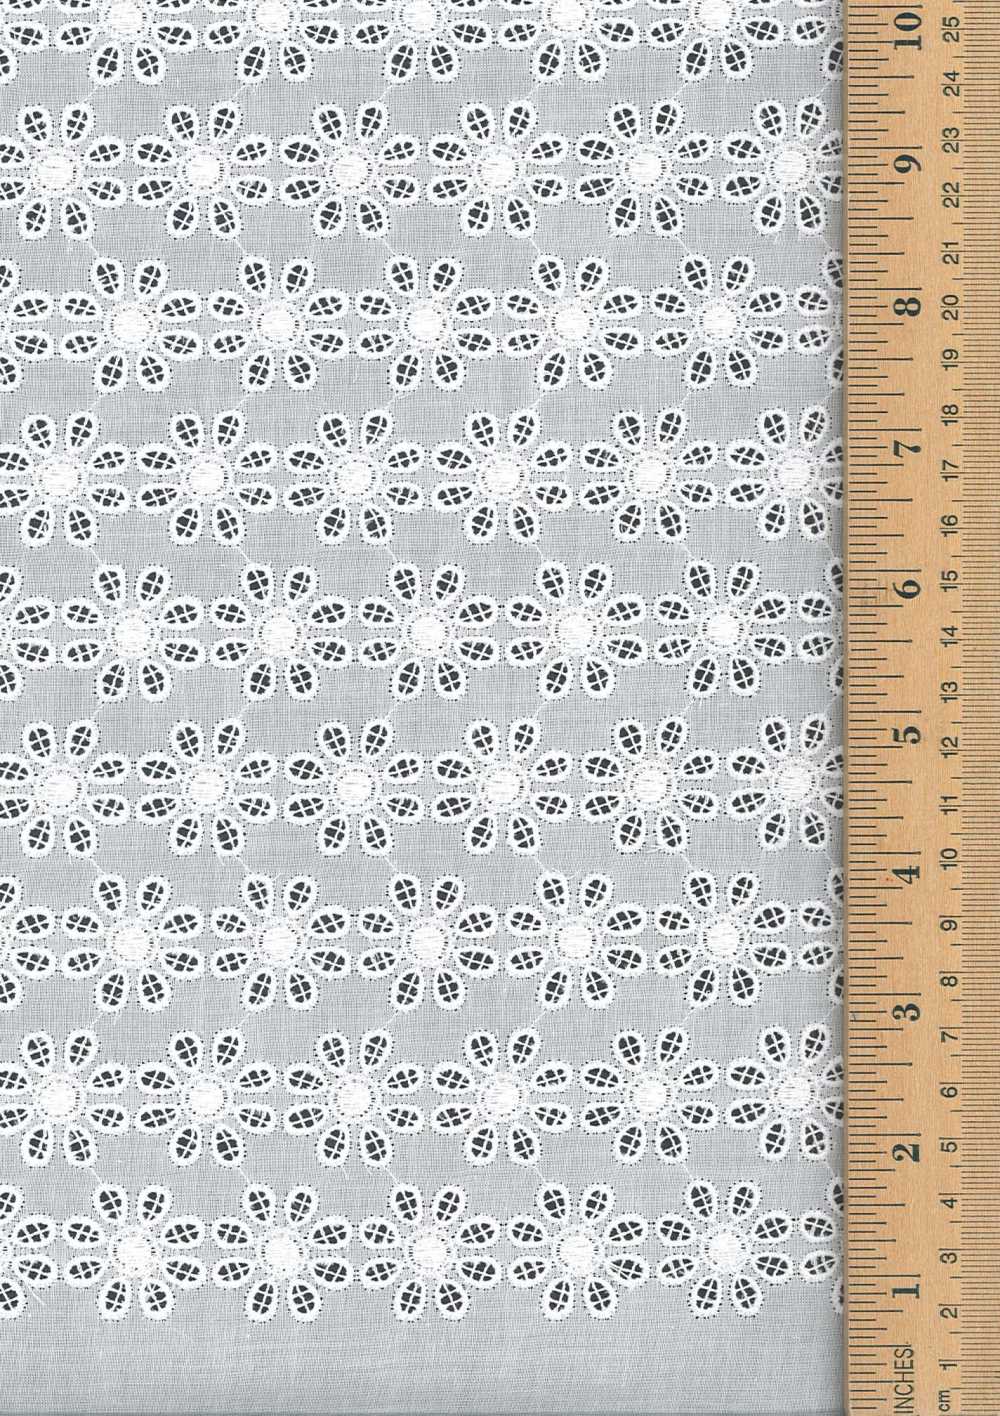 55535 Wide Width Cotton Lace[Textile / Fabric] Floria